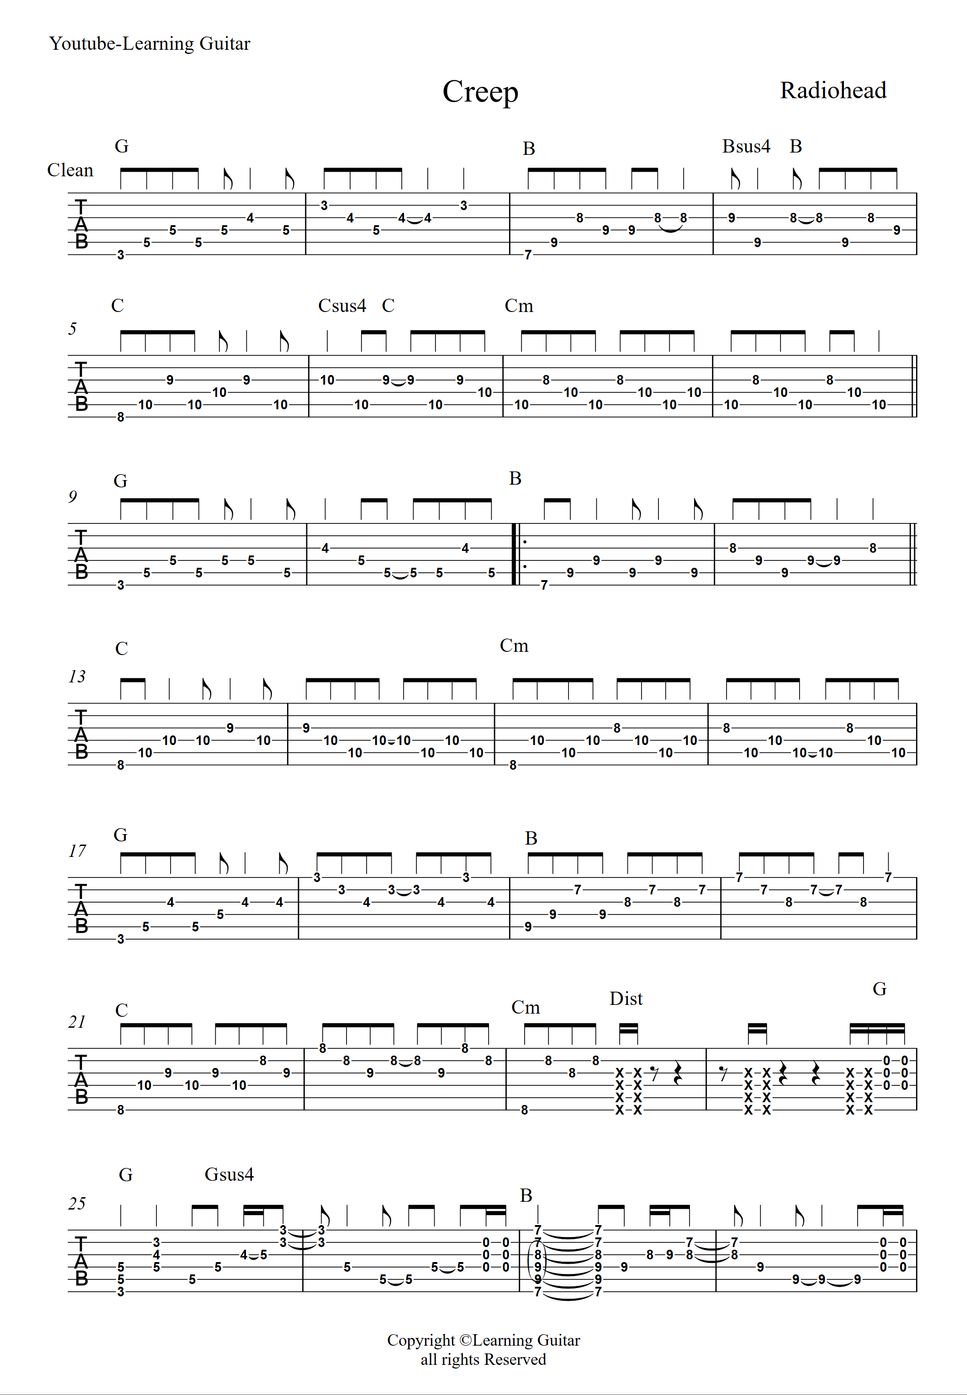 Radiohead - Creep ((Electric Guitar TAB)) by Learning Guitar